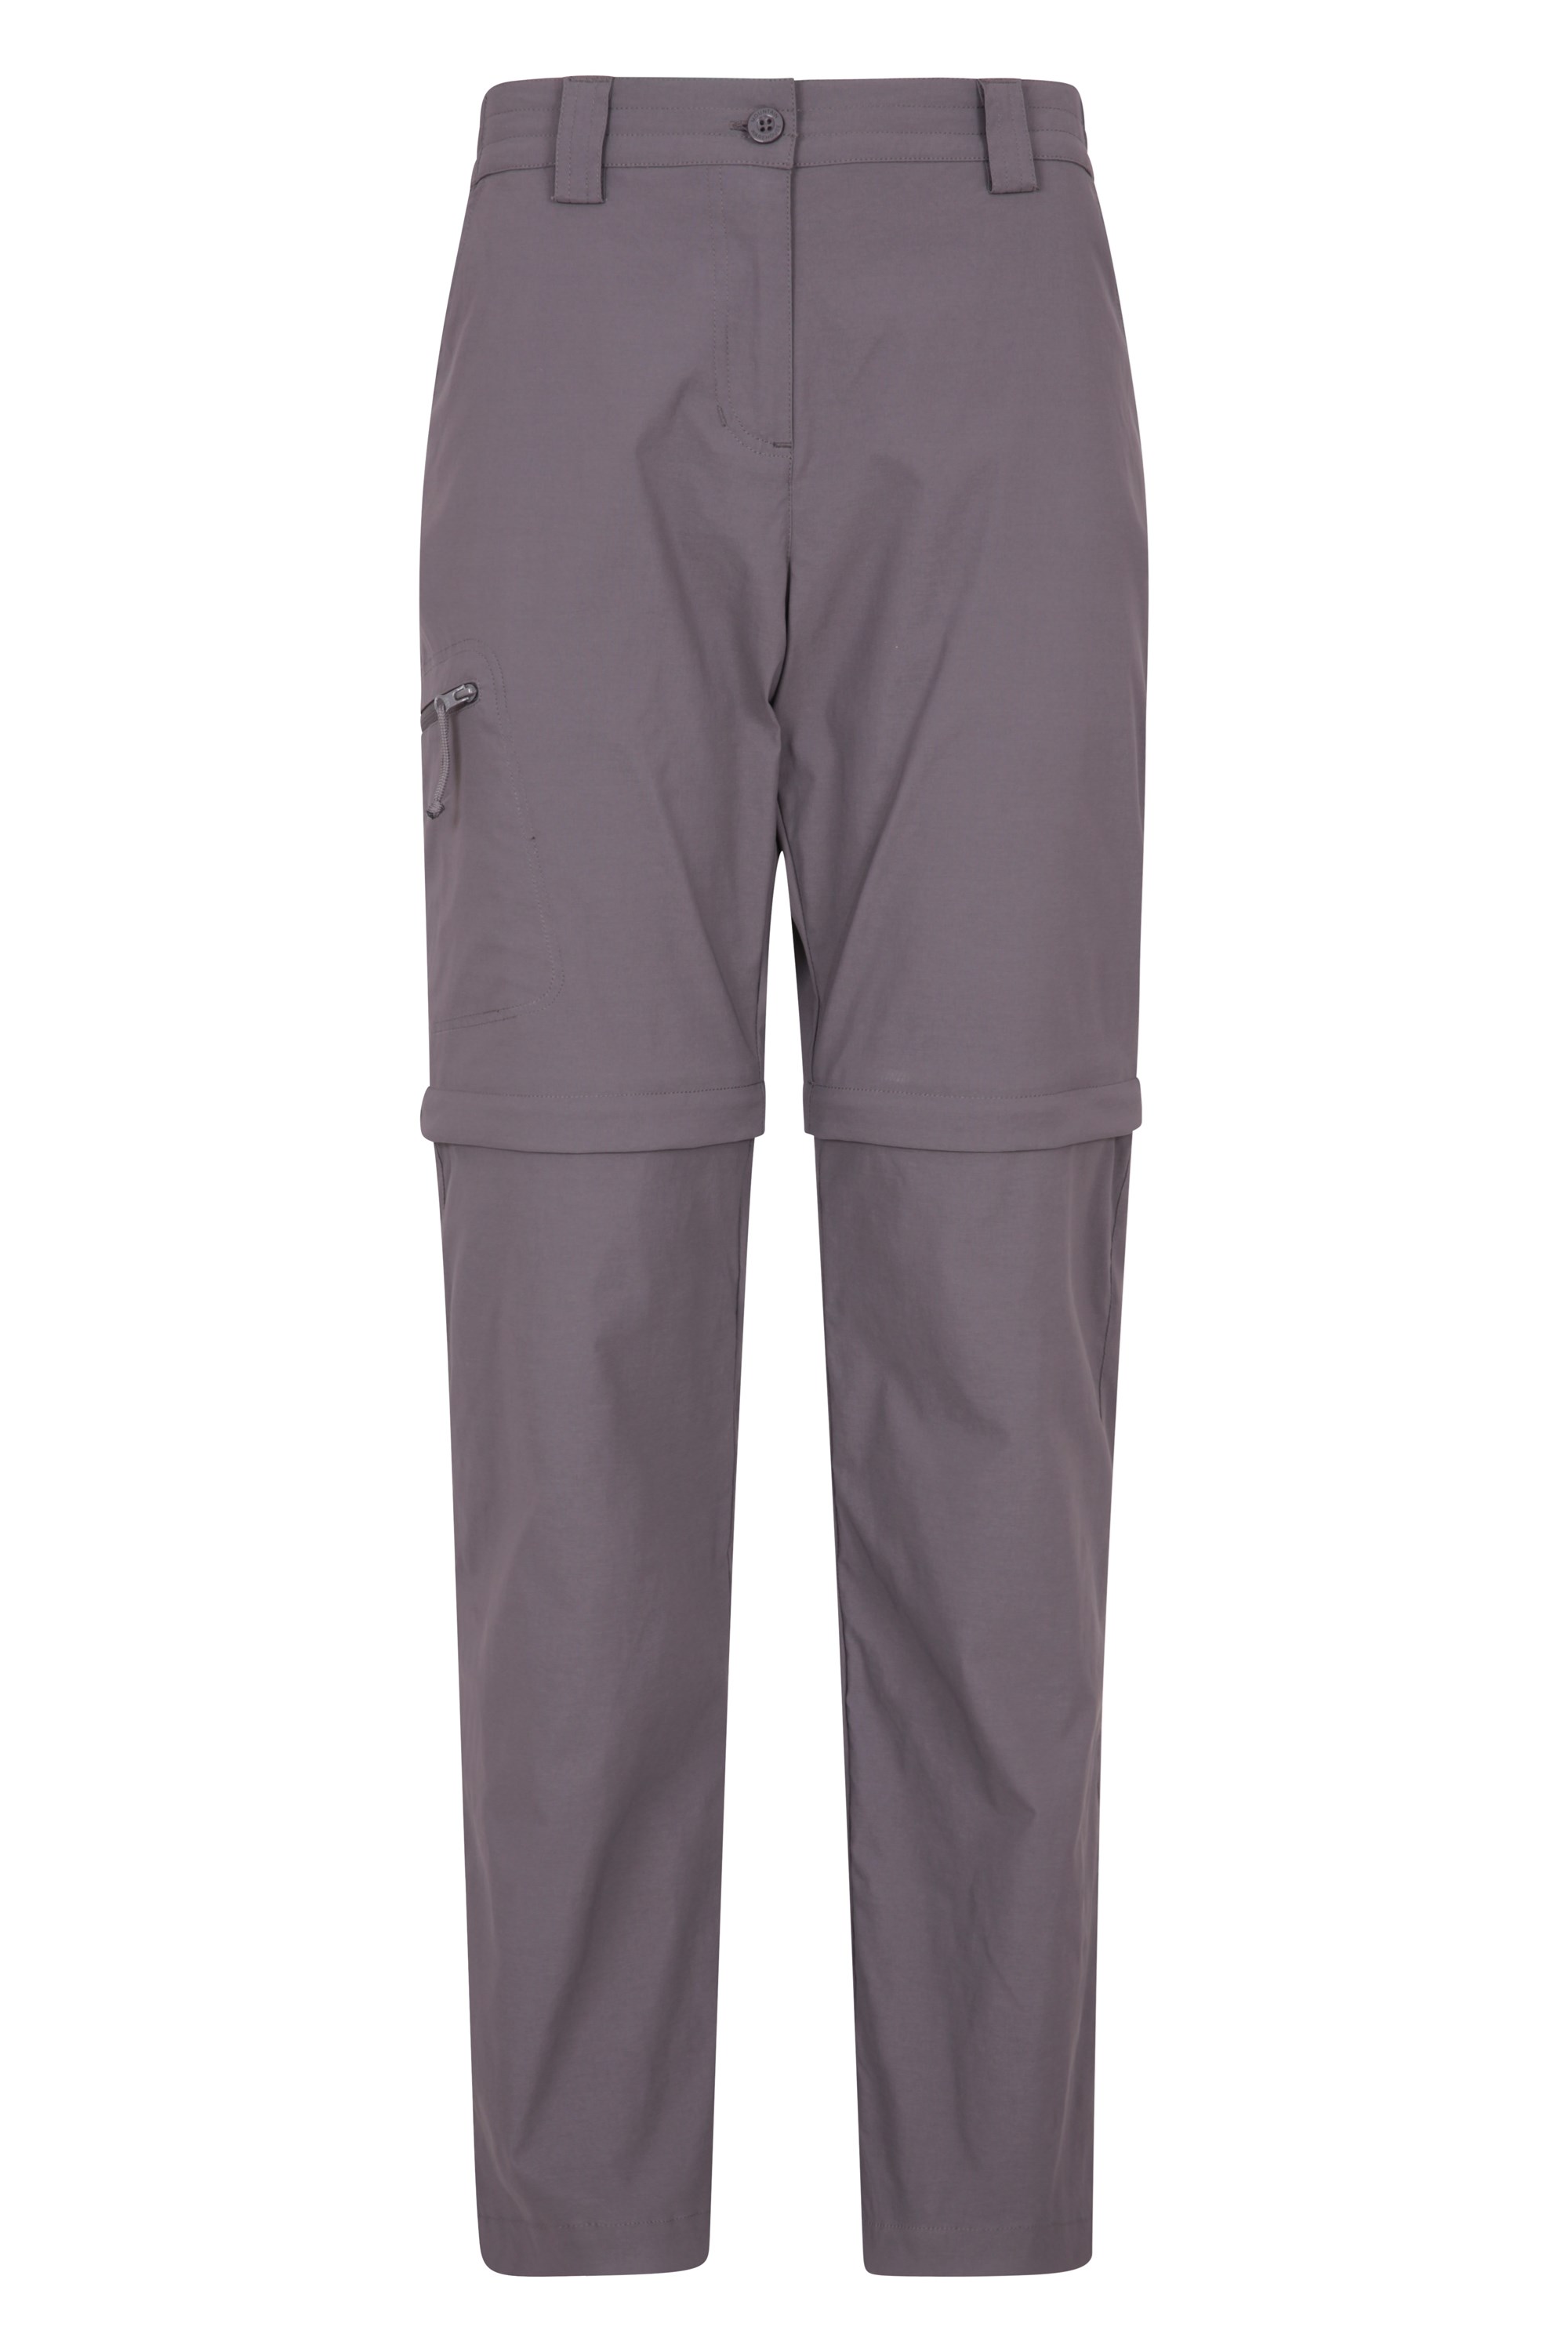 Hiker Stretch Womens Zip-off Trousers - Short Length - Grey